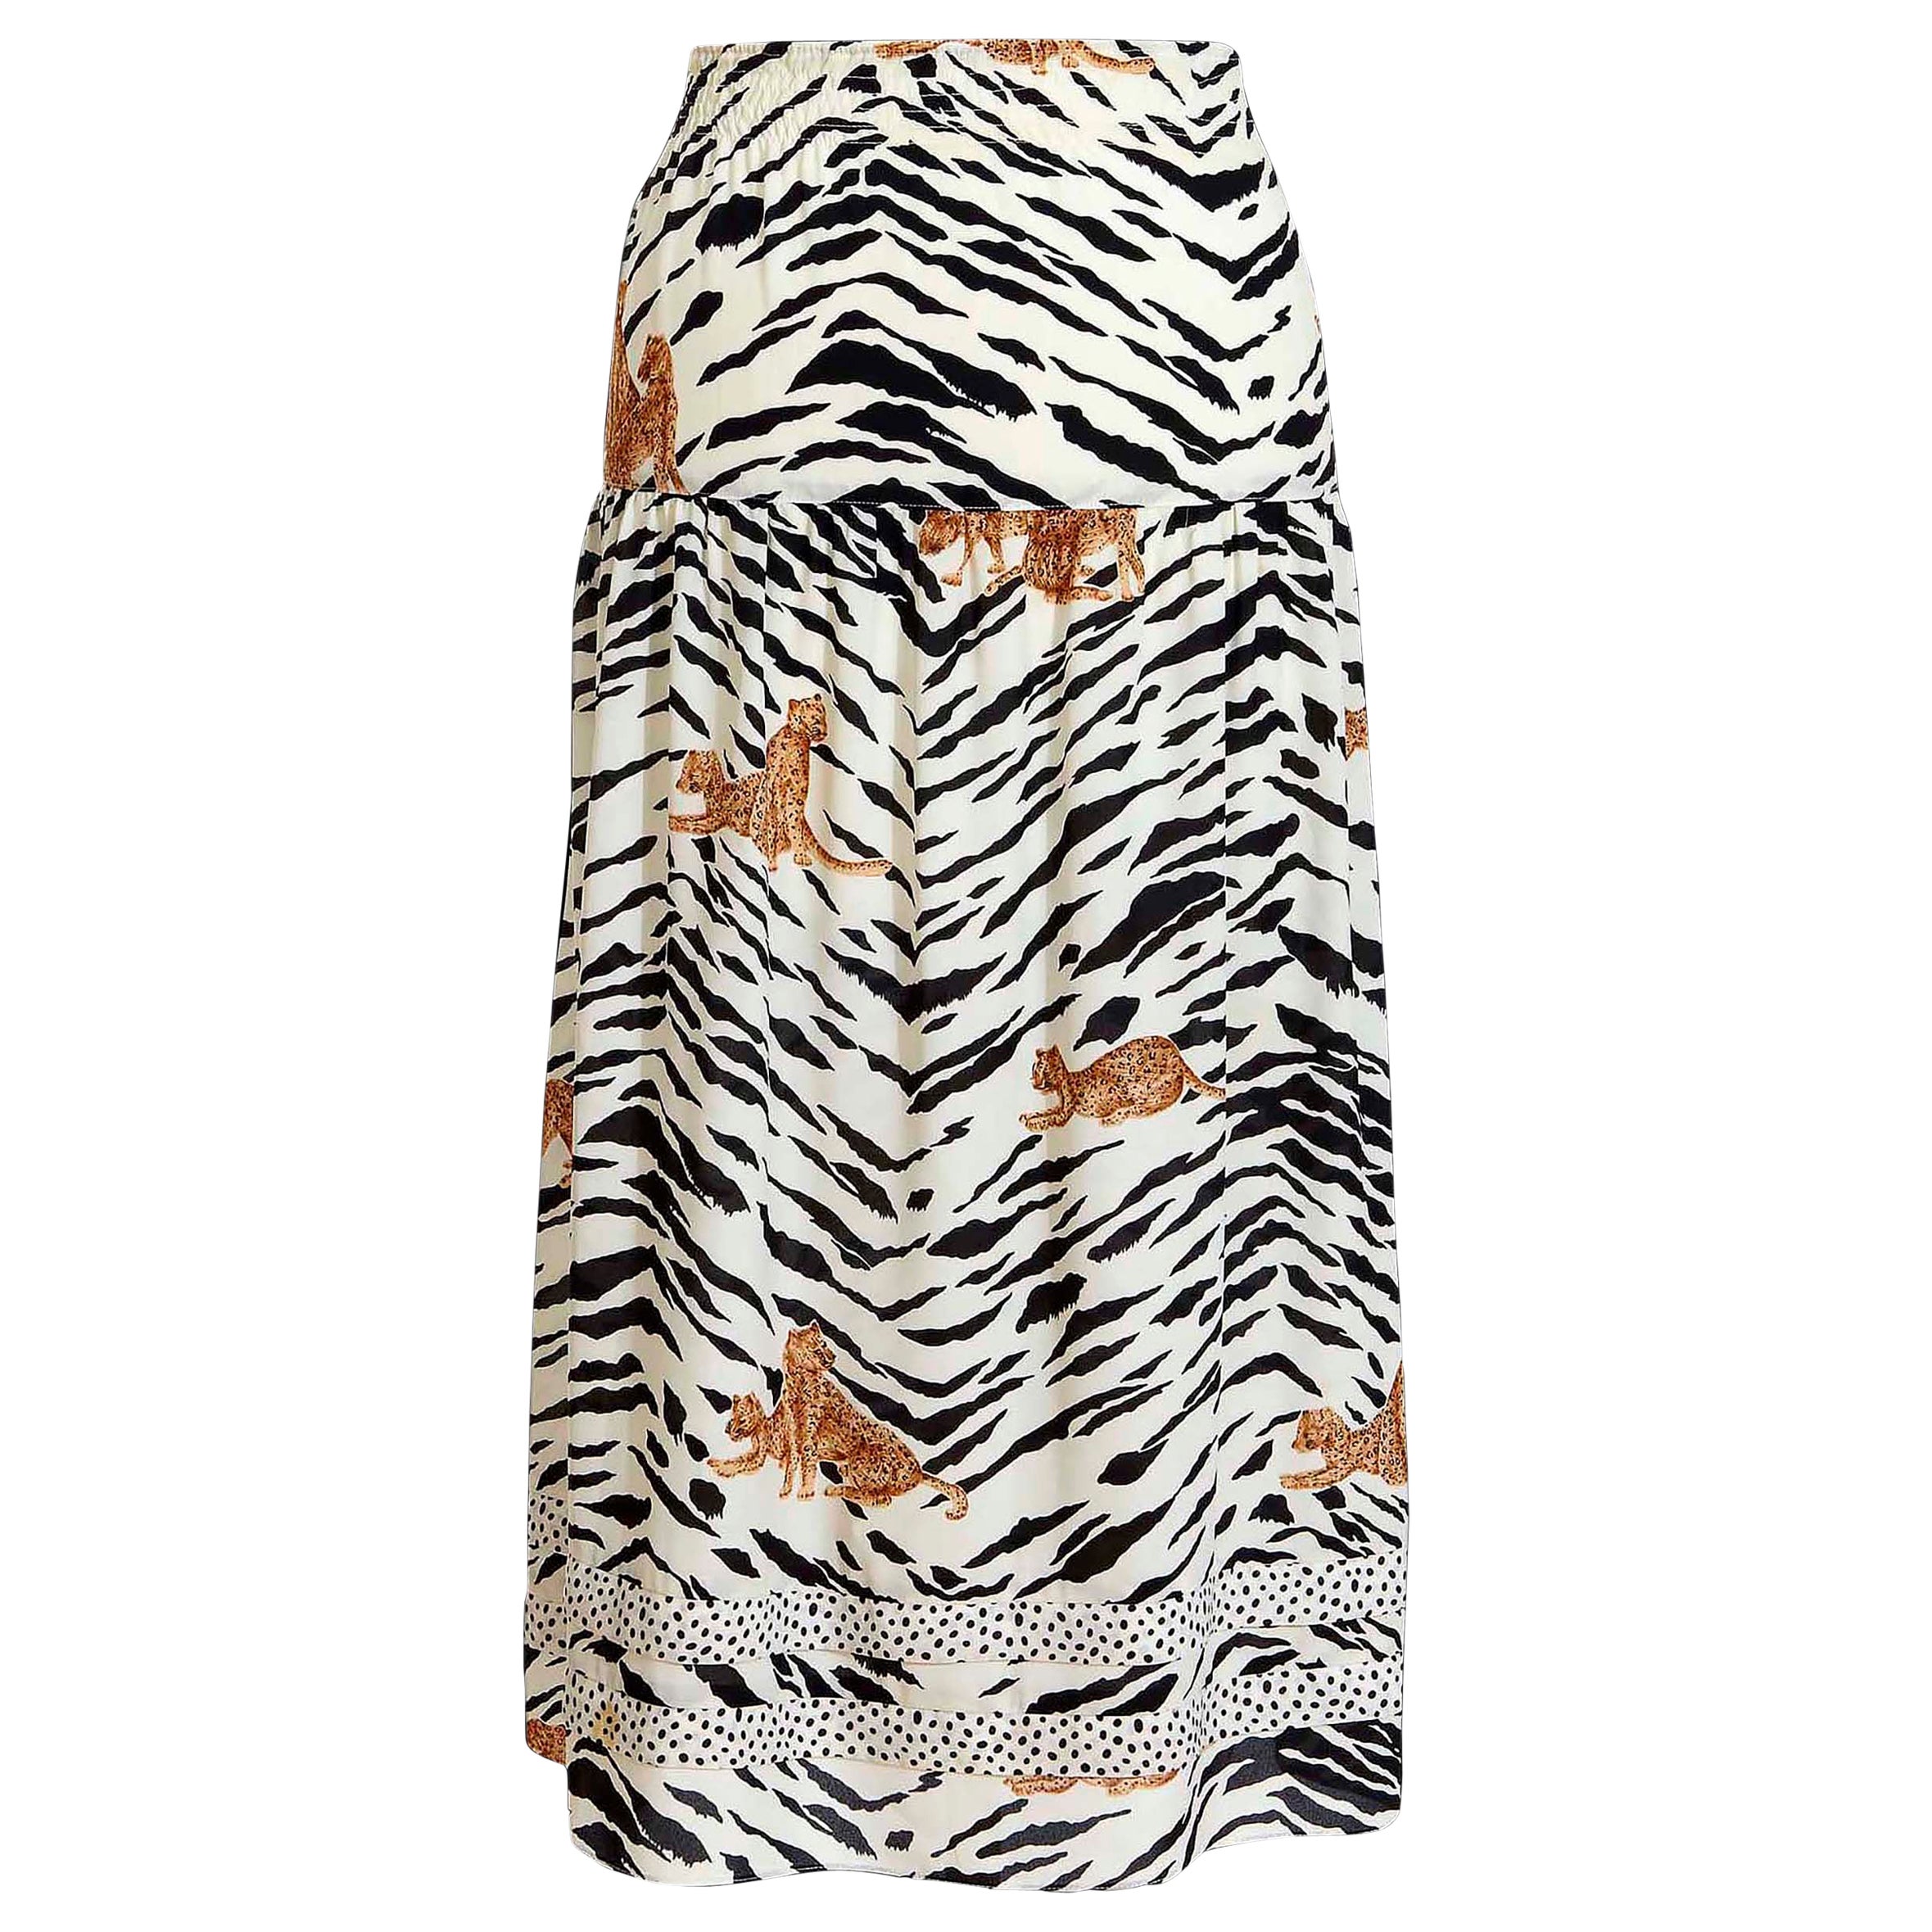 Diane Freis Skirt - 1980s Vintage - Printed Georgette Leopard & Zebra Print For Sale